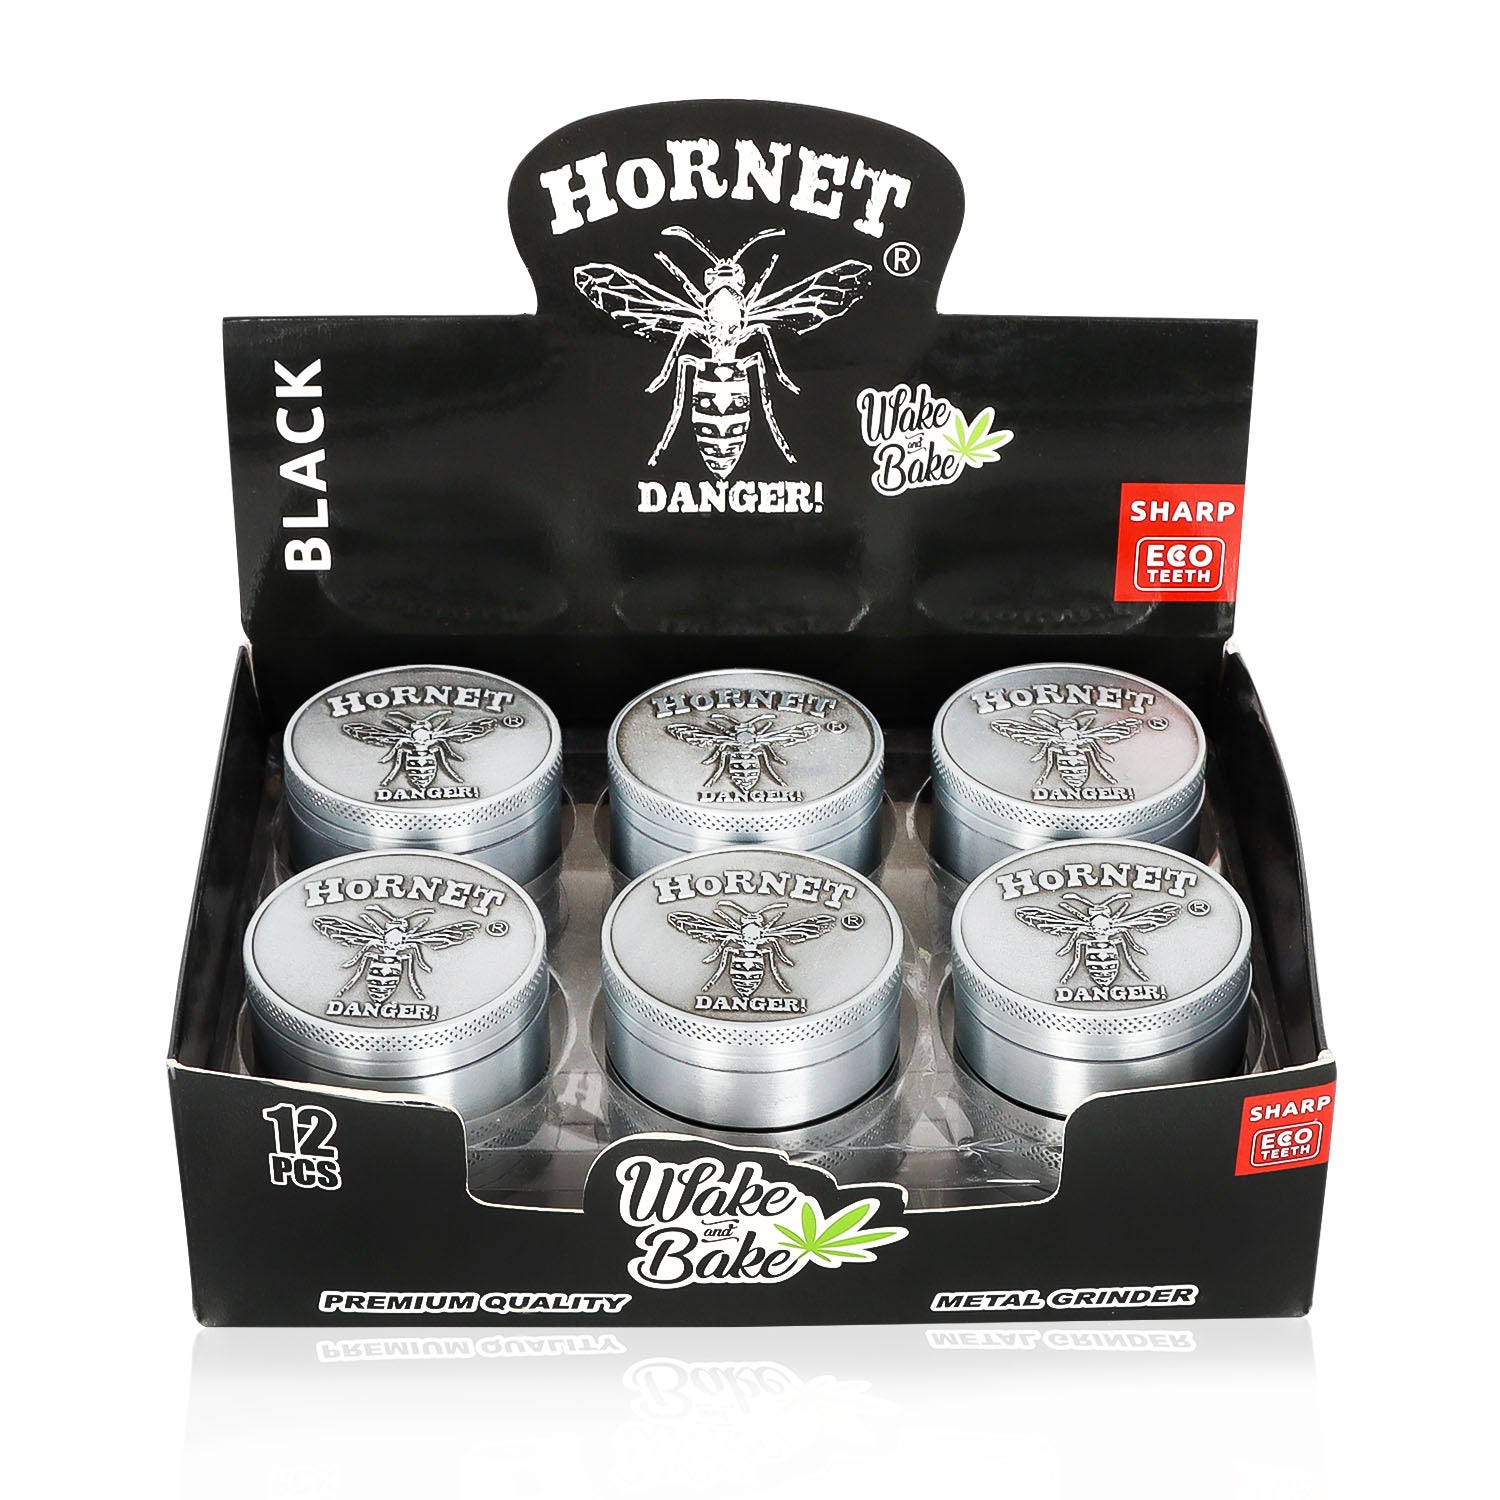 HORNET Zinc Alloy Herb Grinder, 3 Lay Ø 50 Smoker Grinder, Portable & Easy Clean Metal Herbal Grinder, 6 PCS / Box